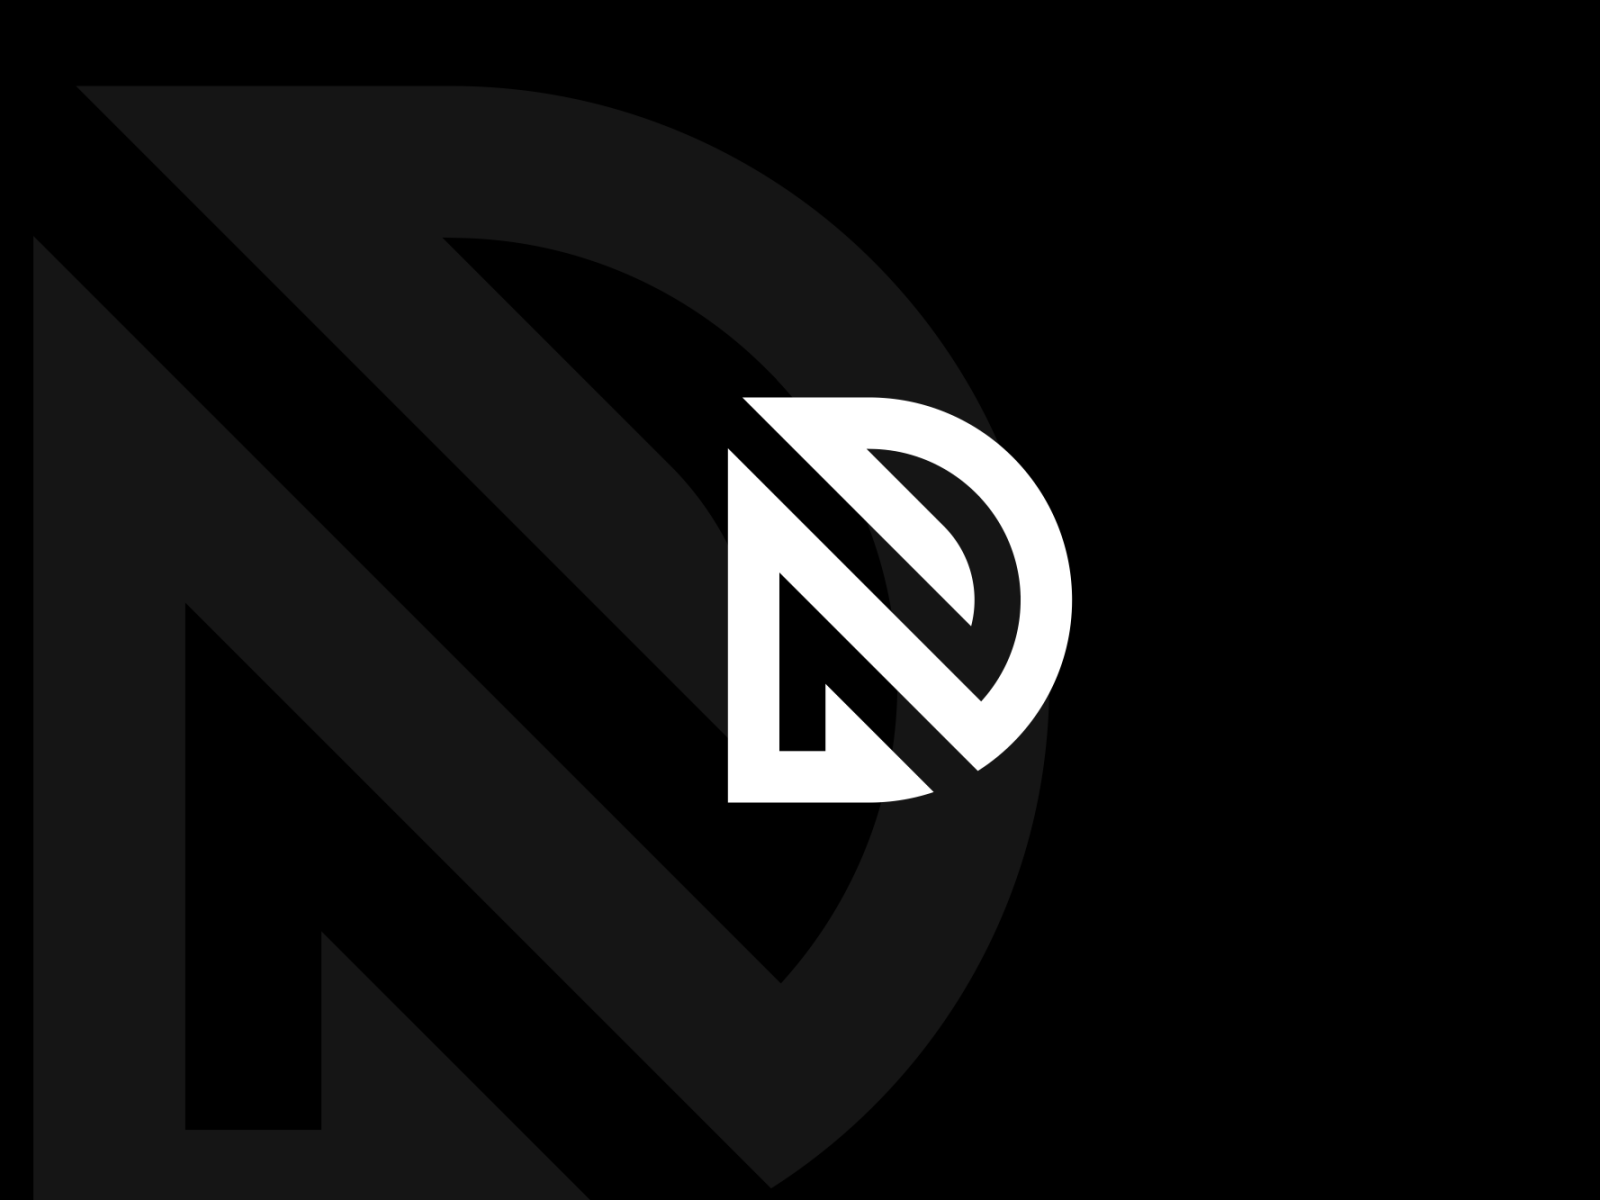 DN logo design by goy_design on Dribbble